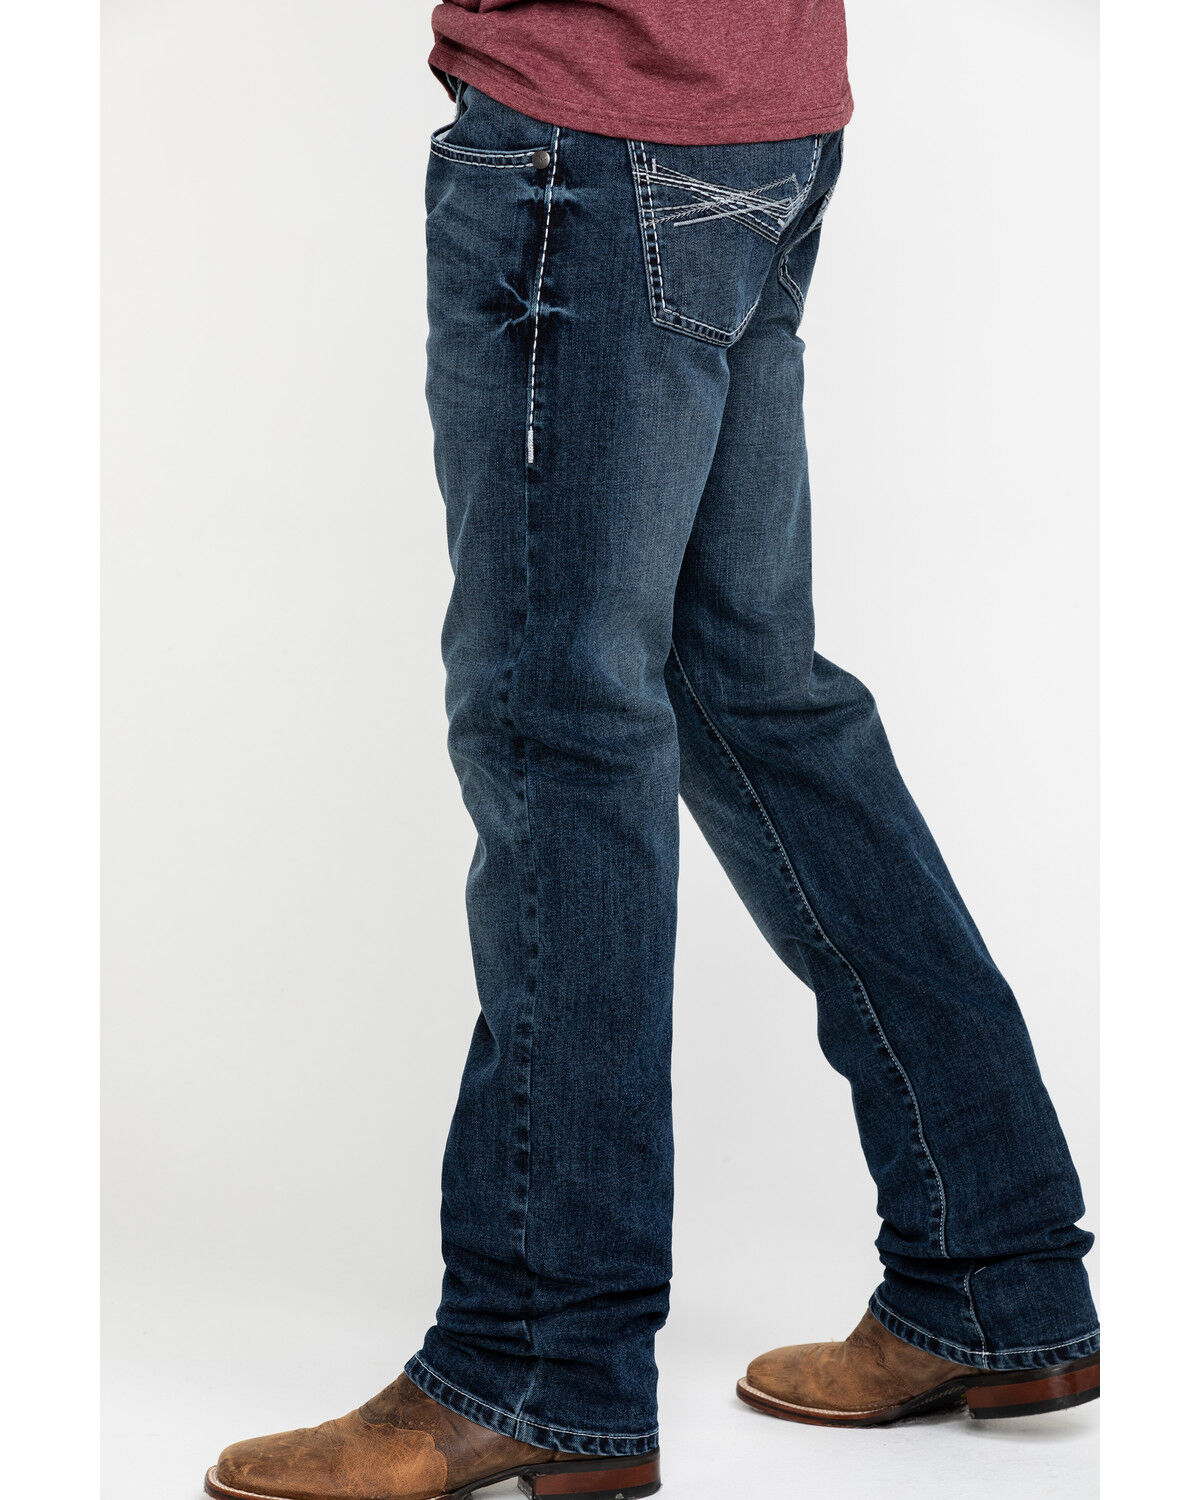 rock wrangler jeans